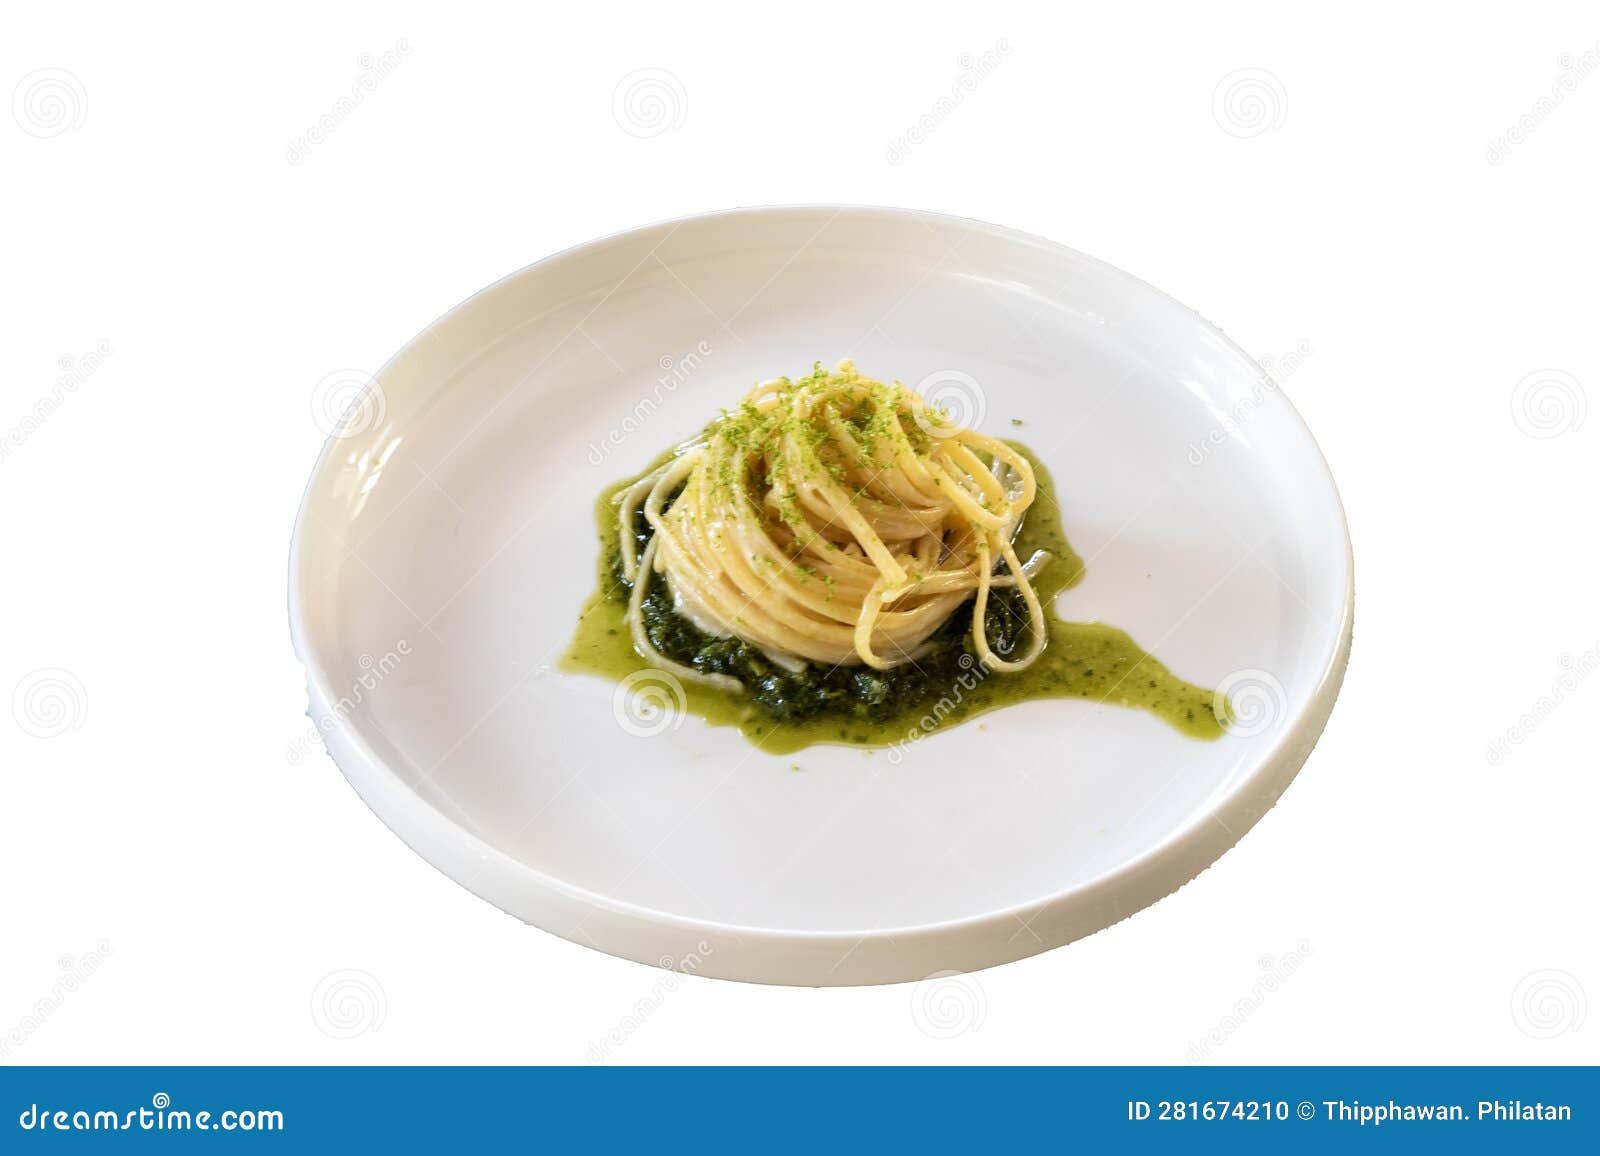 pasta and pesto sauce with herbs cuisine italiane